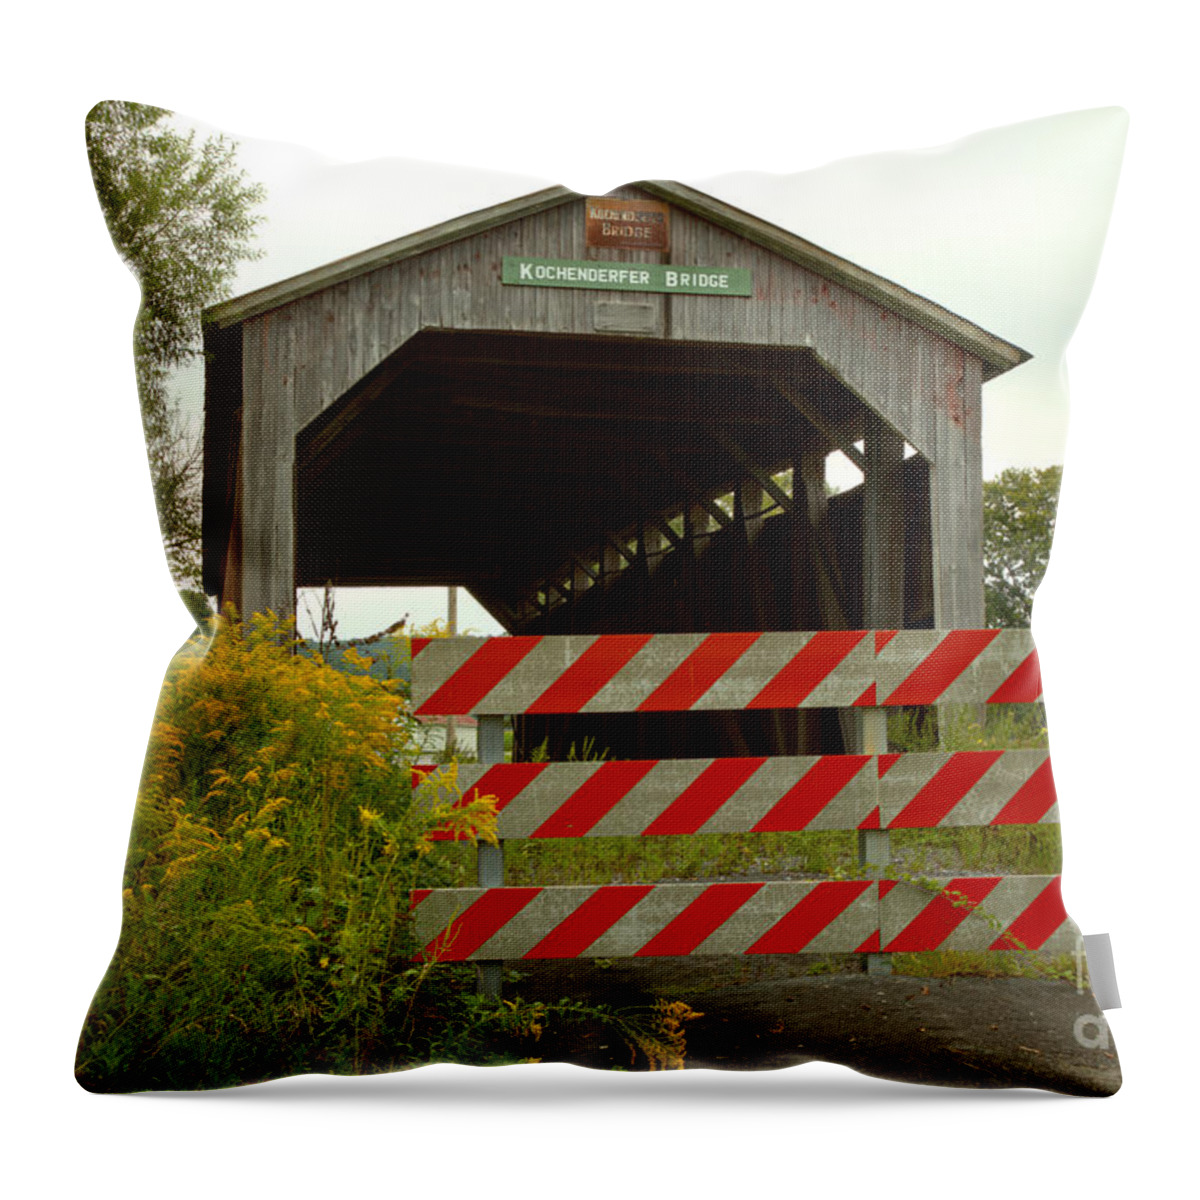 Kochenderfer Covered Bridge Throw Pillow featuring the photograph Historic Kochenderfer Covered Bridge by Adam Jewell